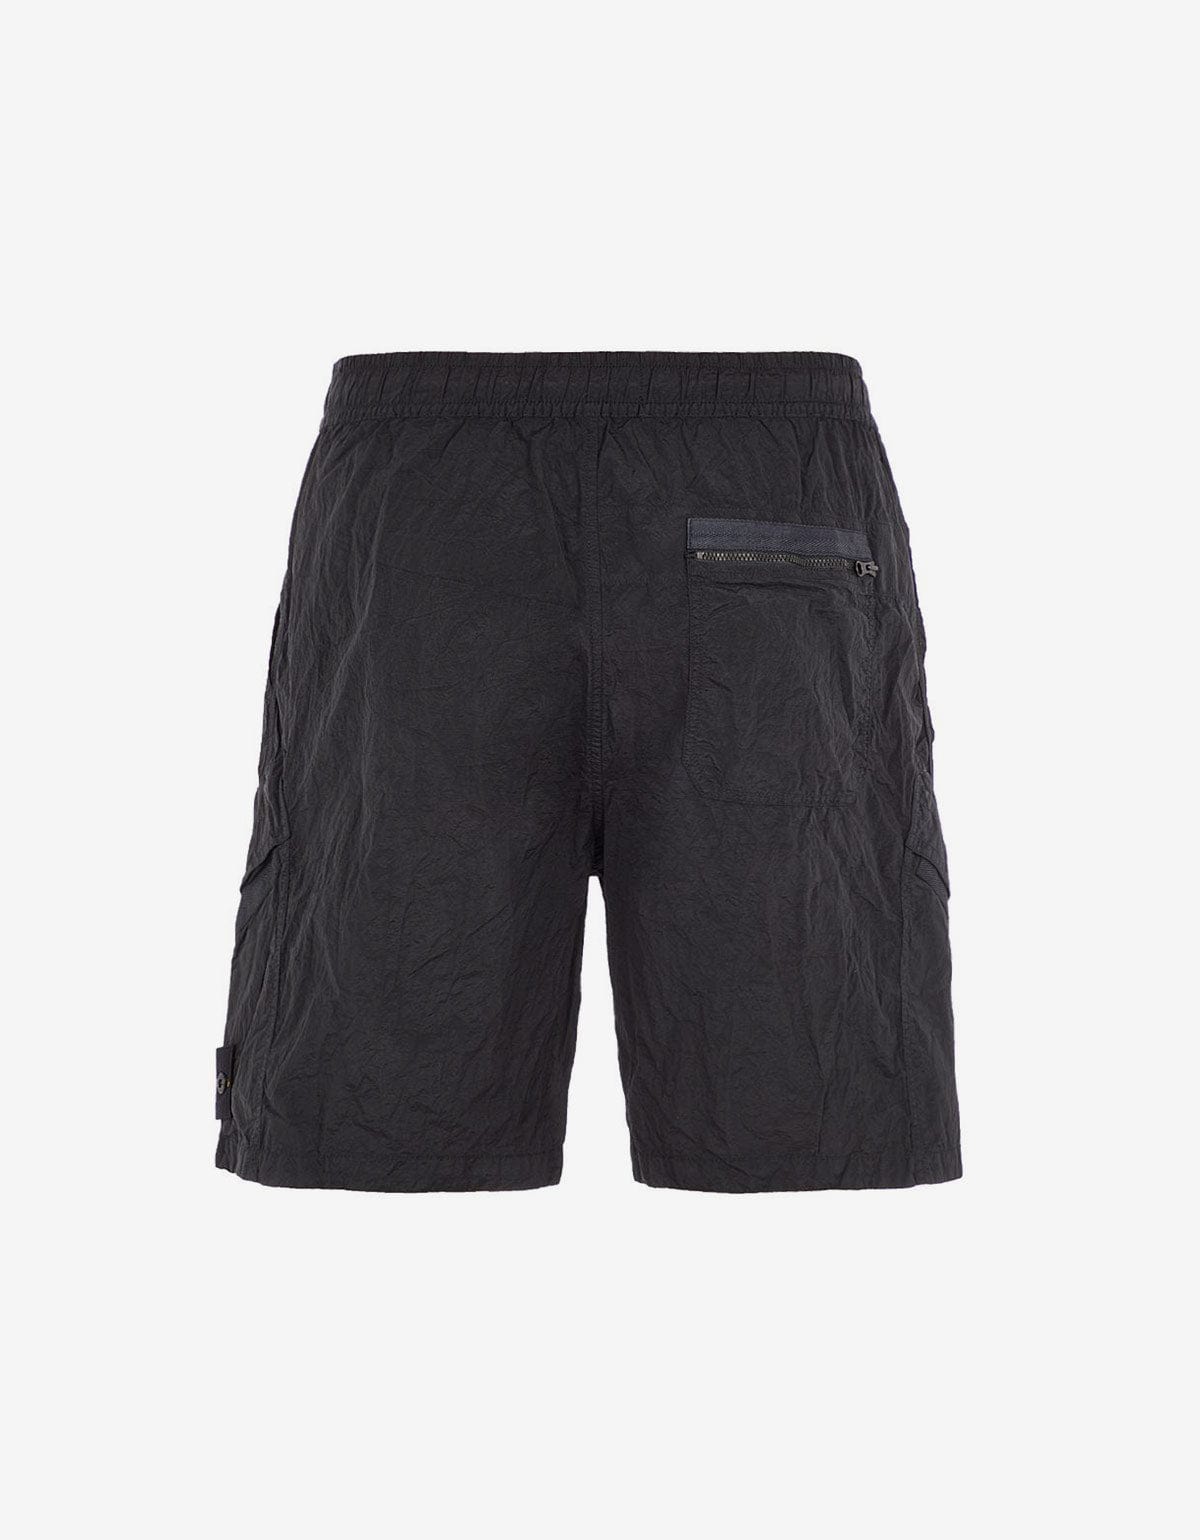 Stone Island Black Nylon Metal Cargo Bermuda Shorts